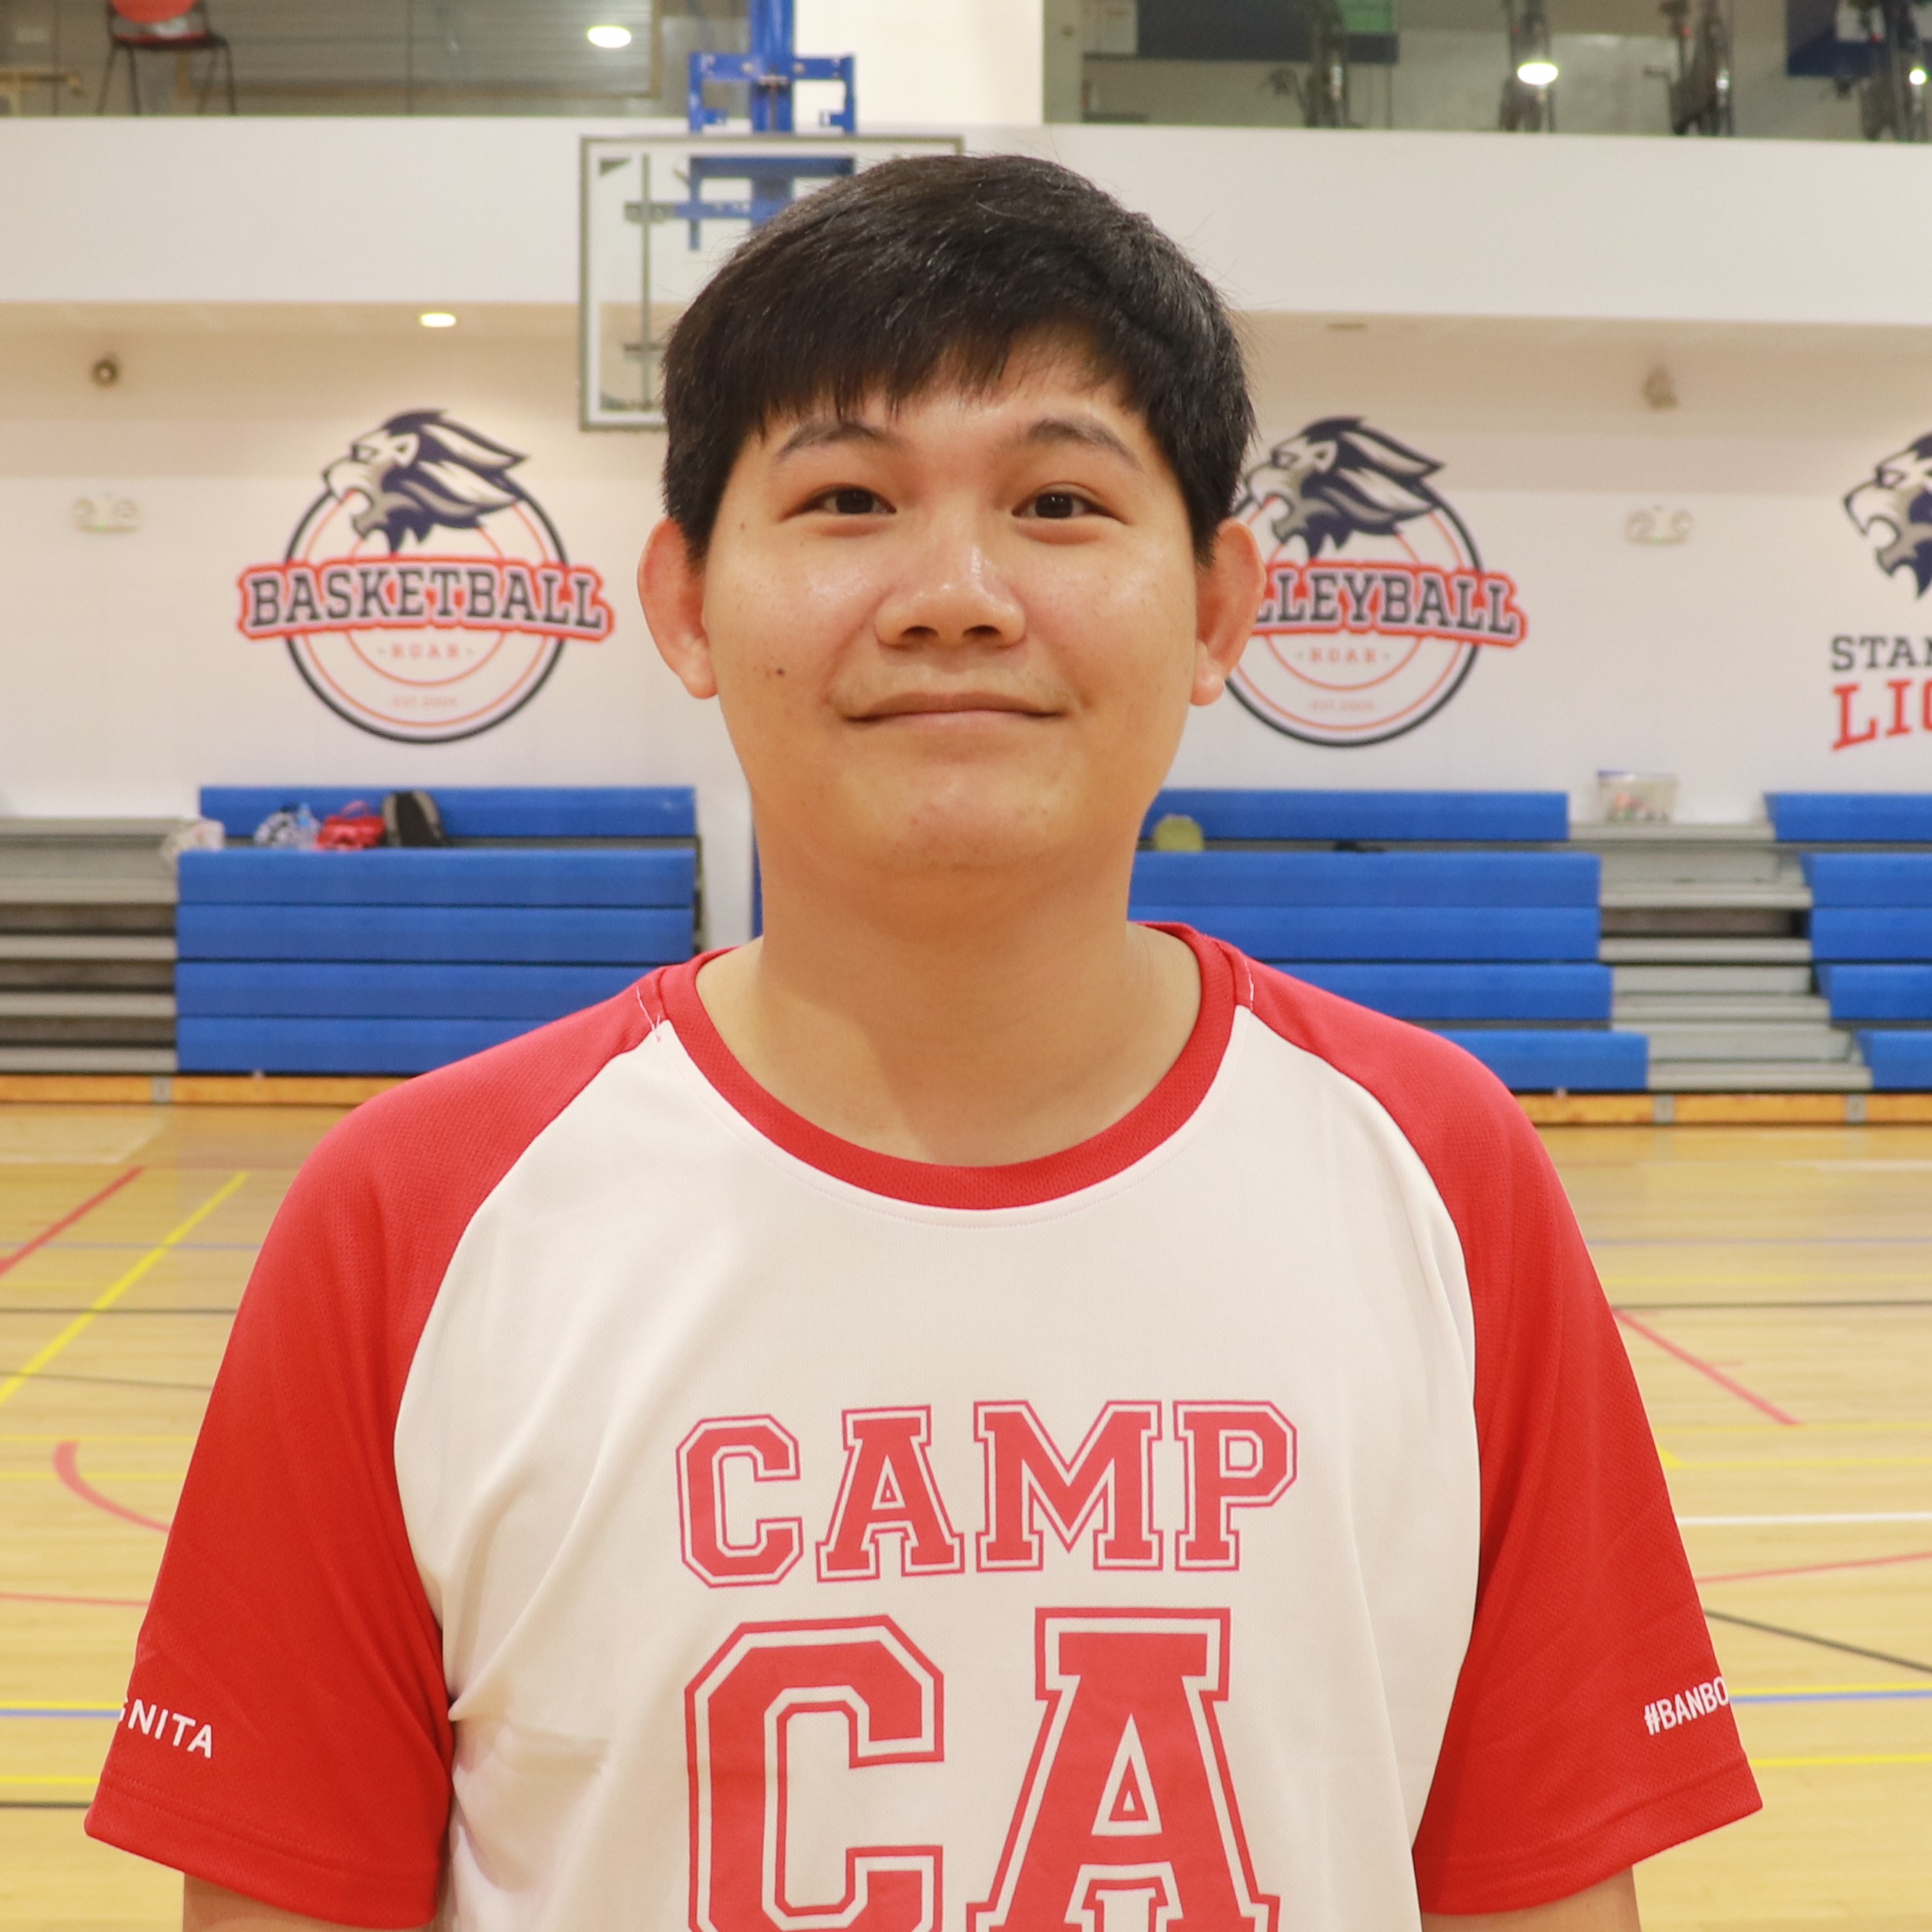 Camp Asia Academy coach